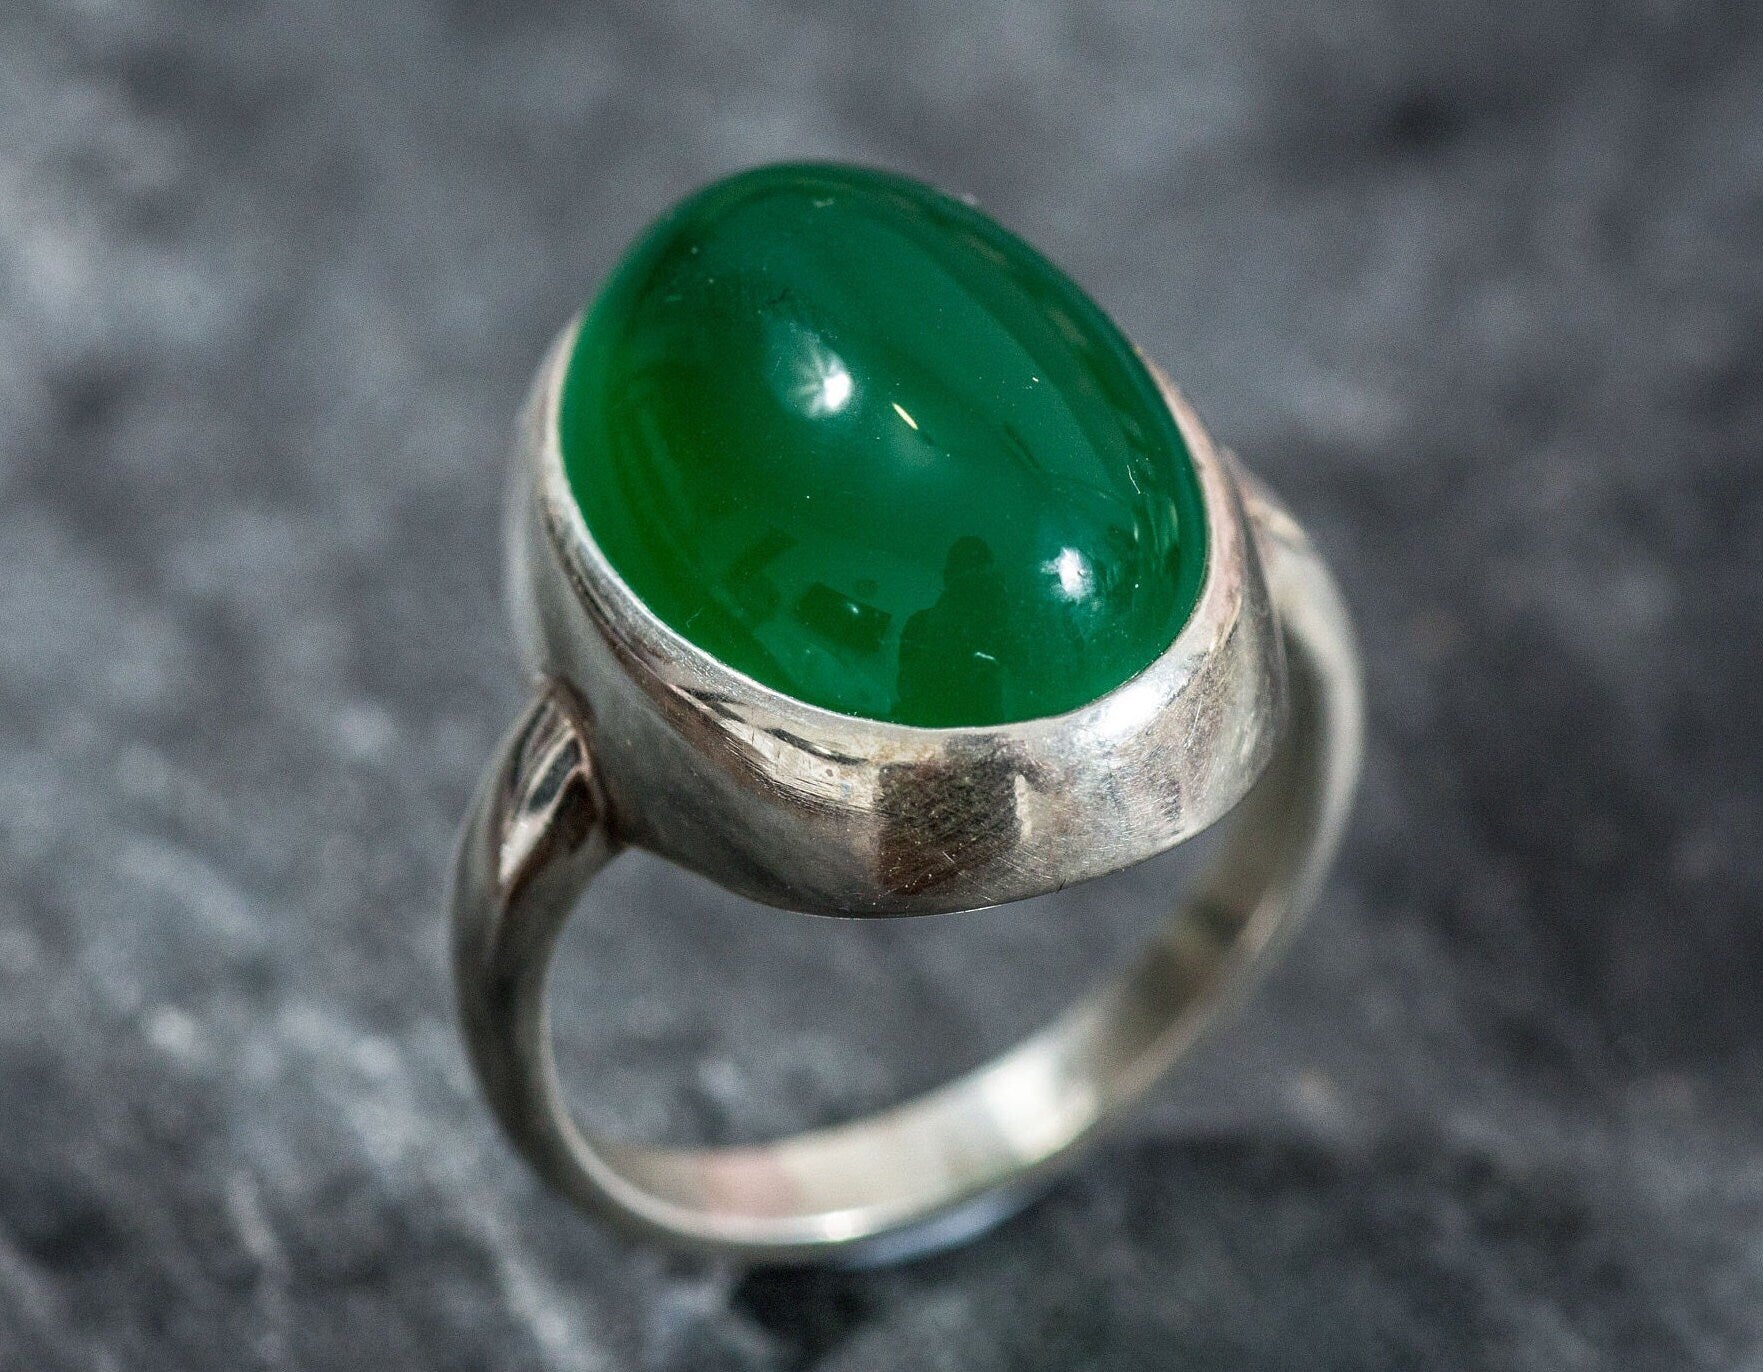 Emerald Ring, Large Emerald, Created Emerald, Green Emerald Ring, Vintage Ring, Green Ring, Emerald Green Ring, Vintage Rings, Solid Silver